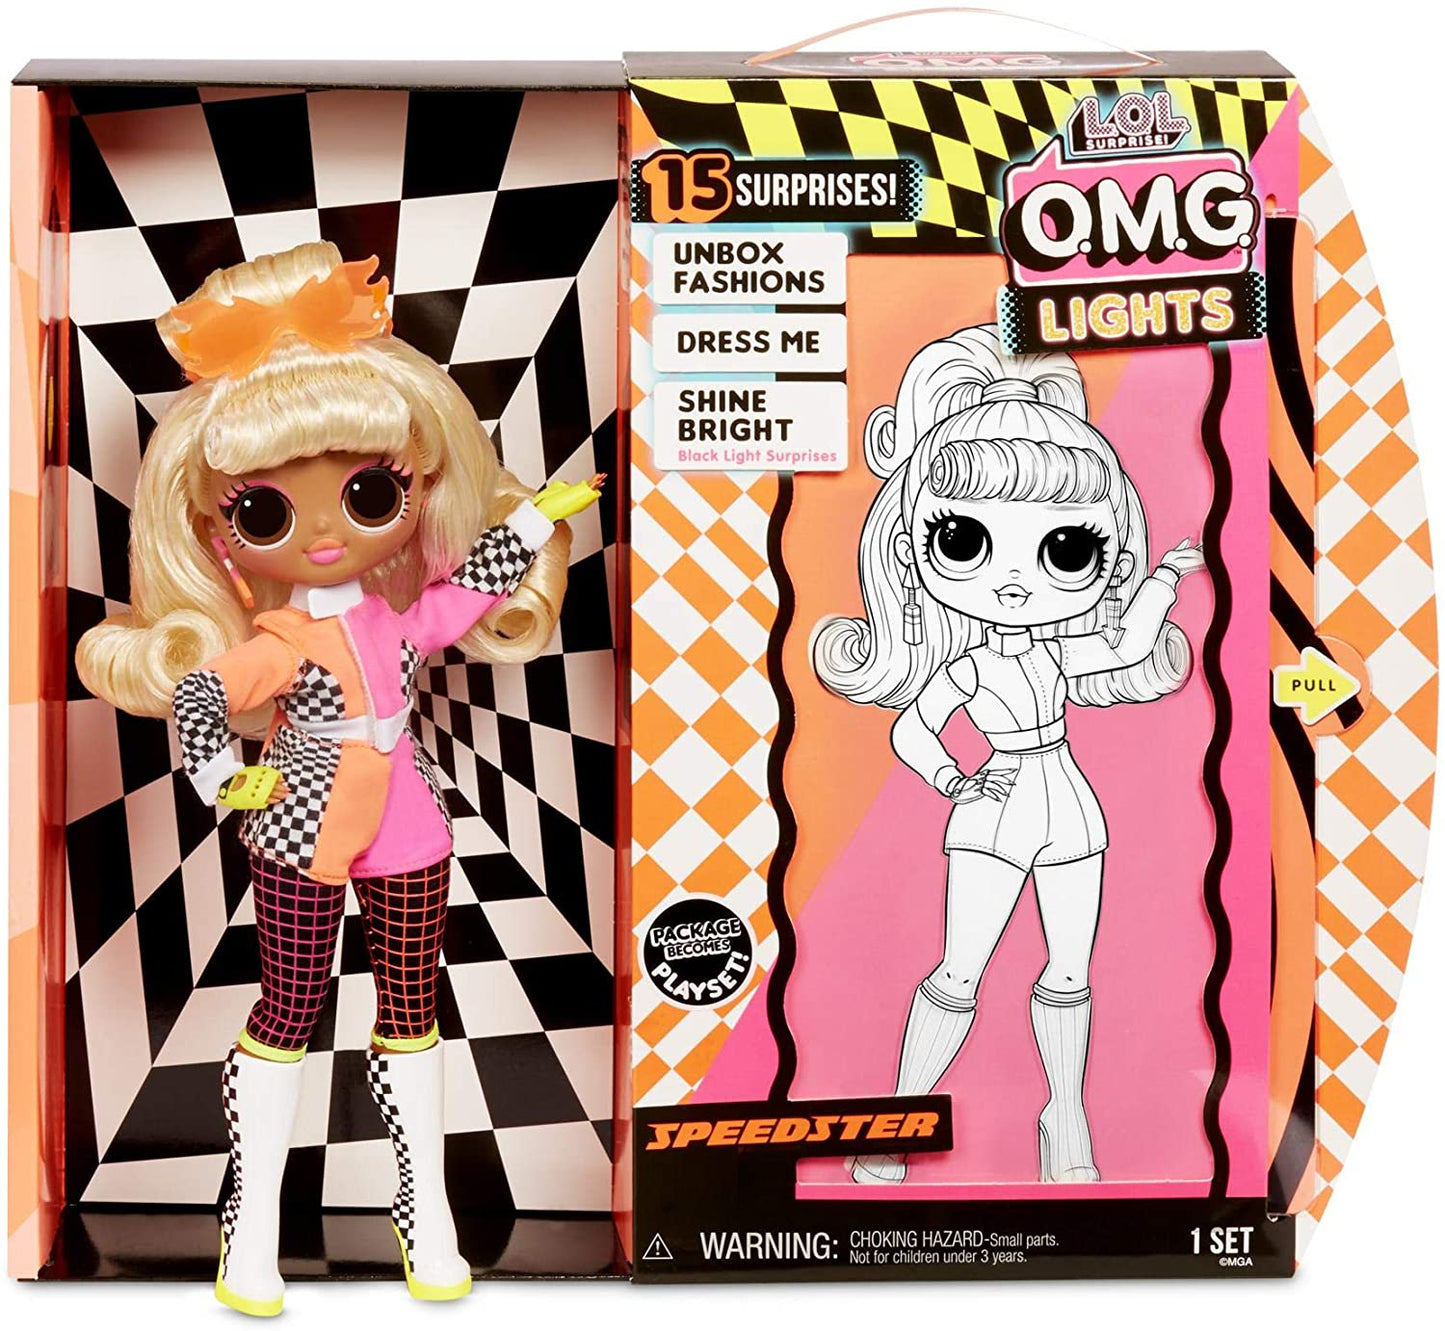 L.O.L. Surprise! O.M.G. Lights Speedster Fashion Doll with 15 Surprises